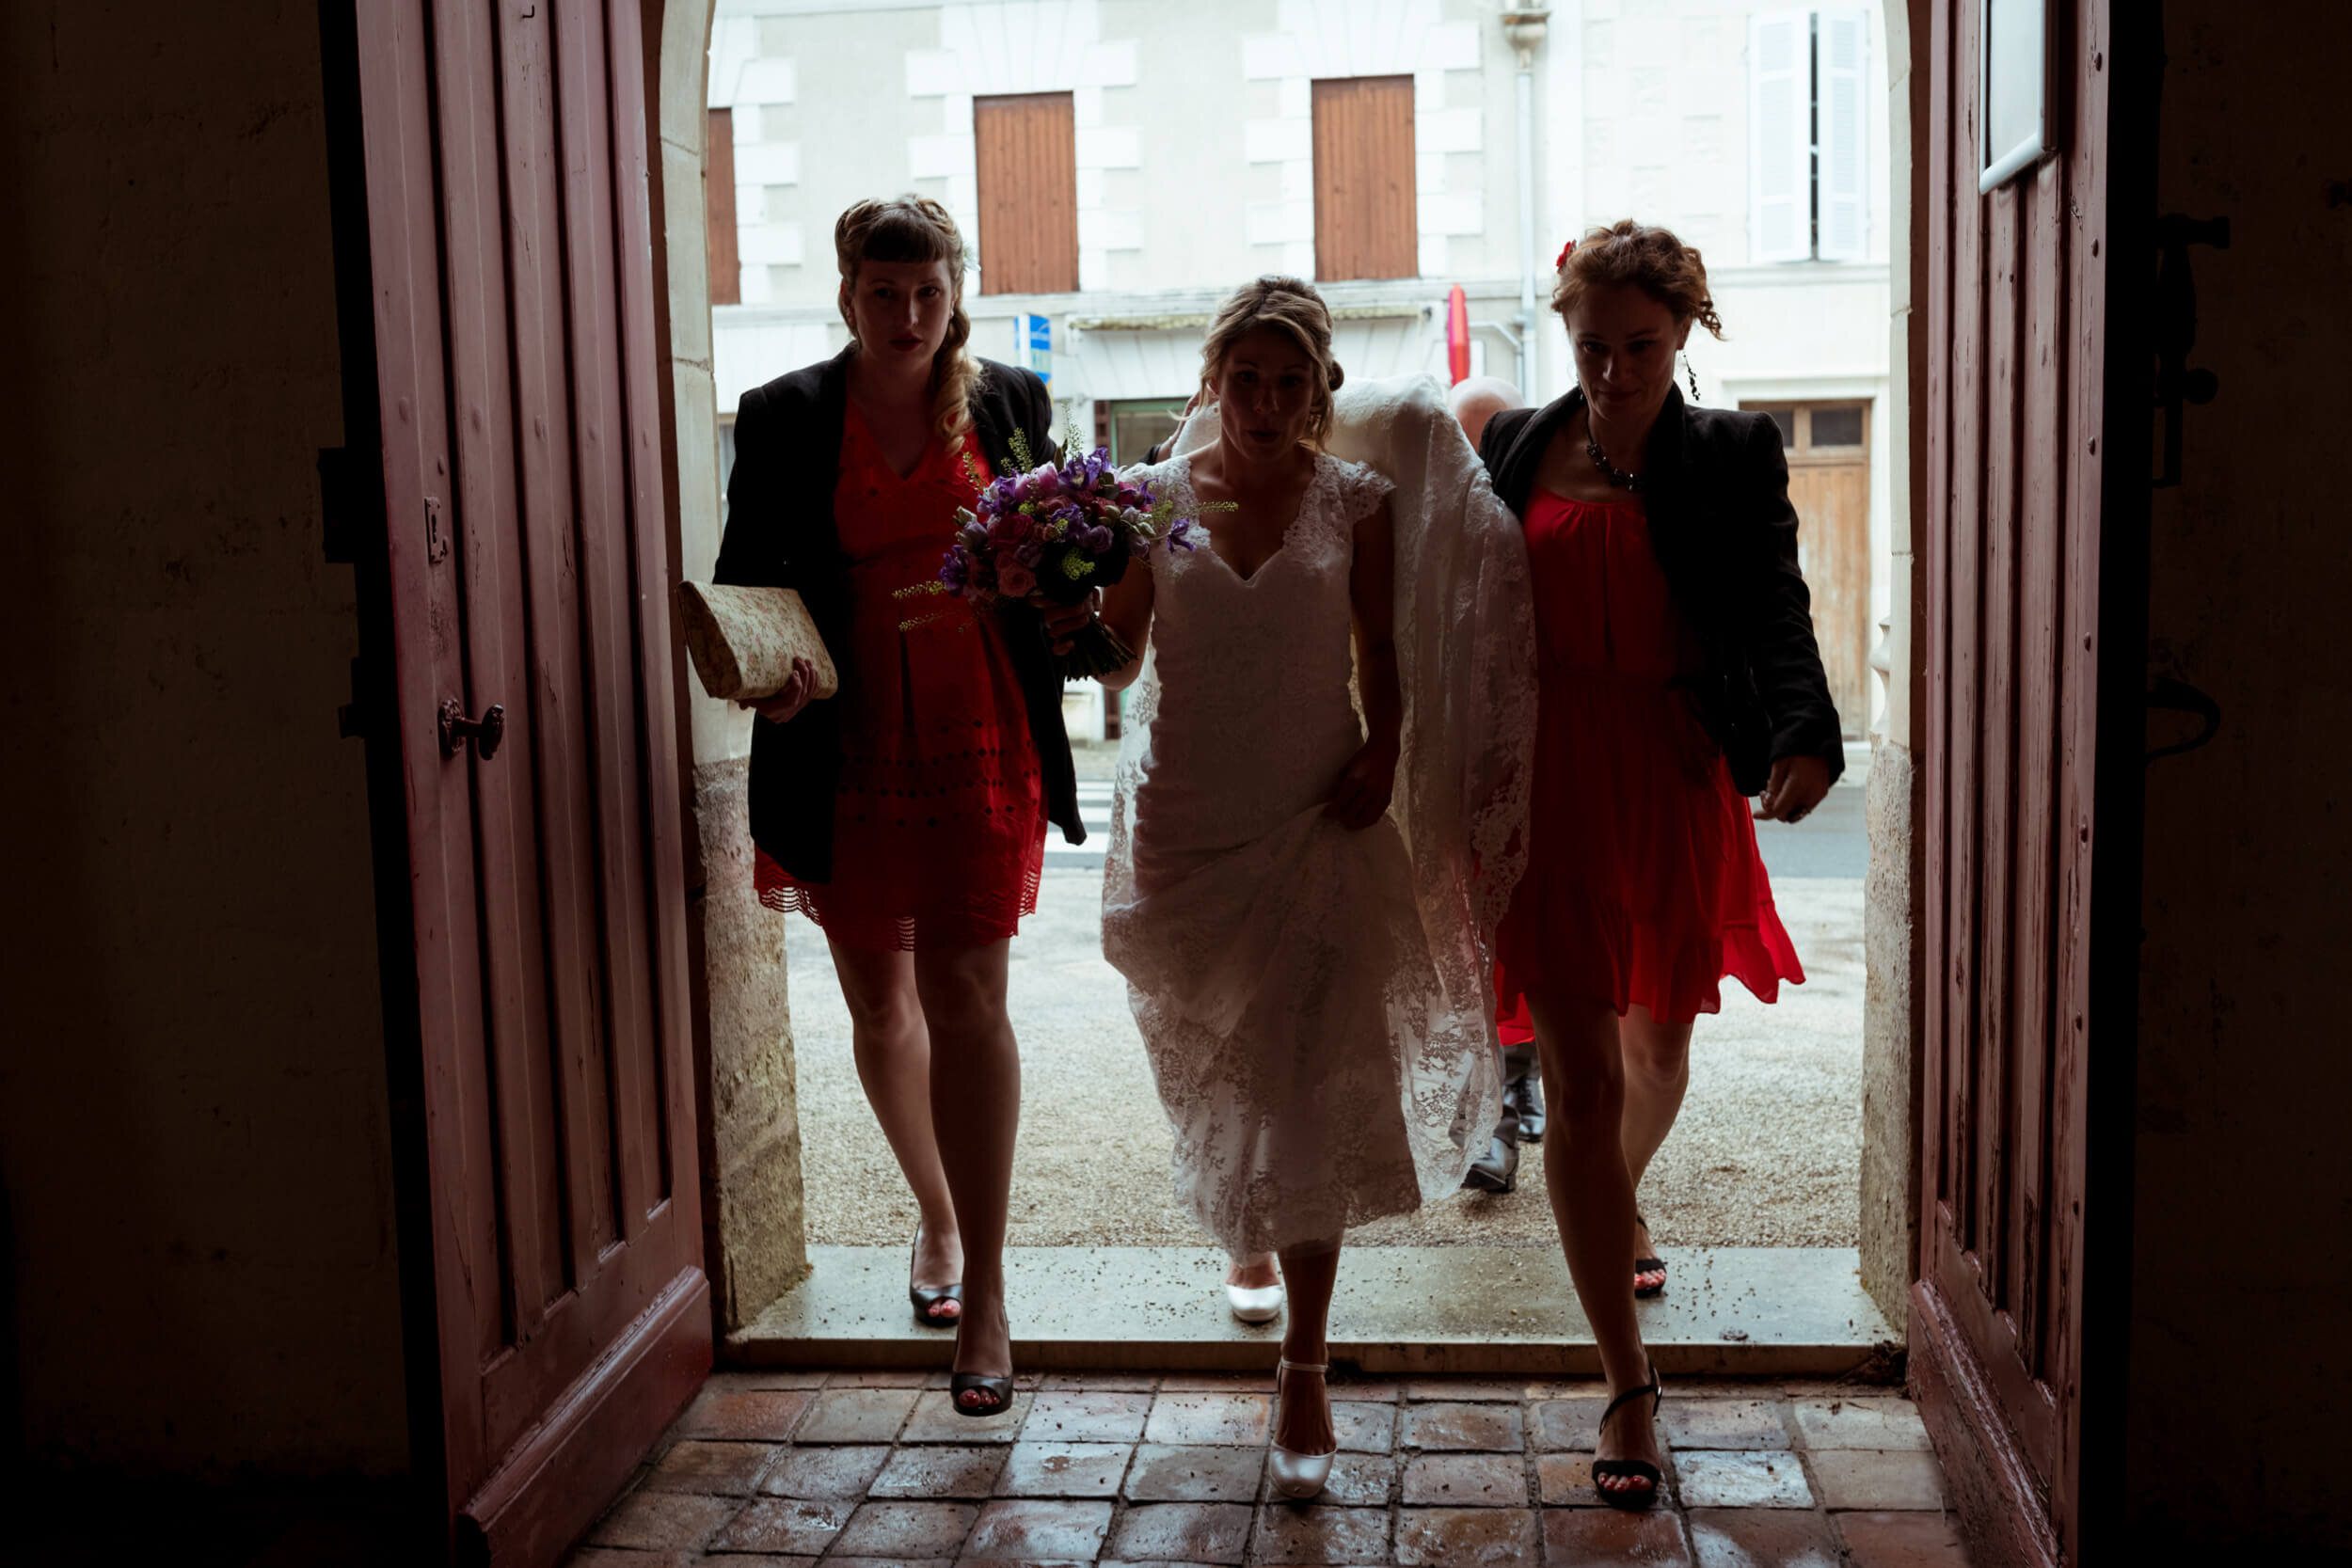 Puyrigaud photographe mariage wedding photographer entrée église